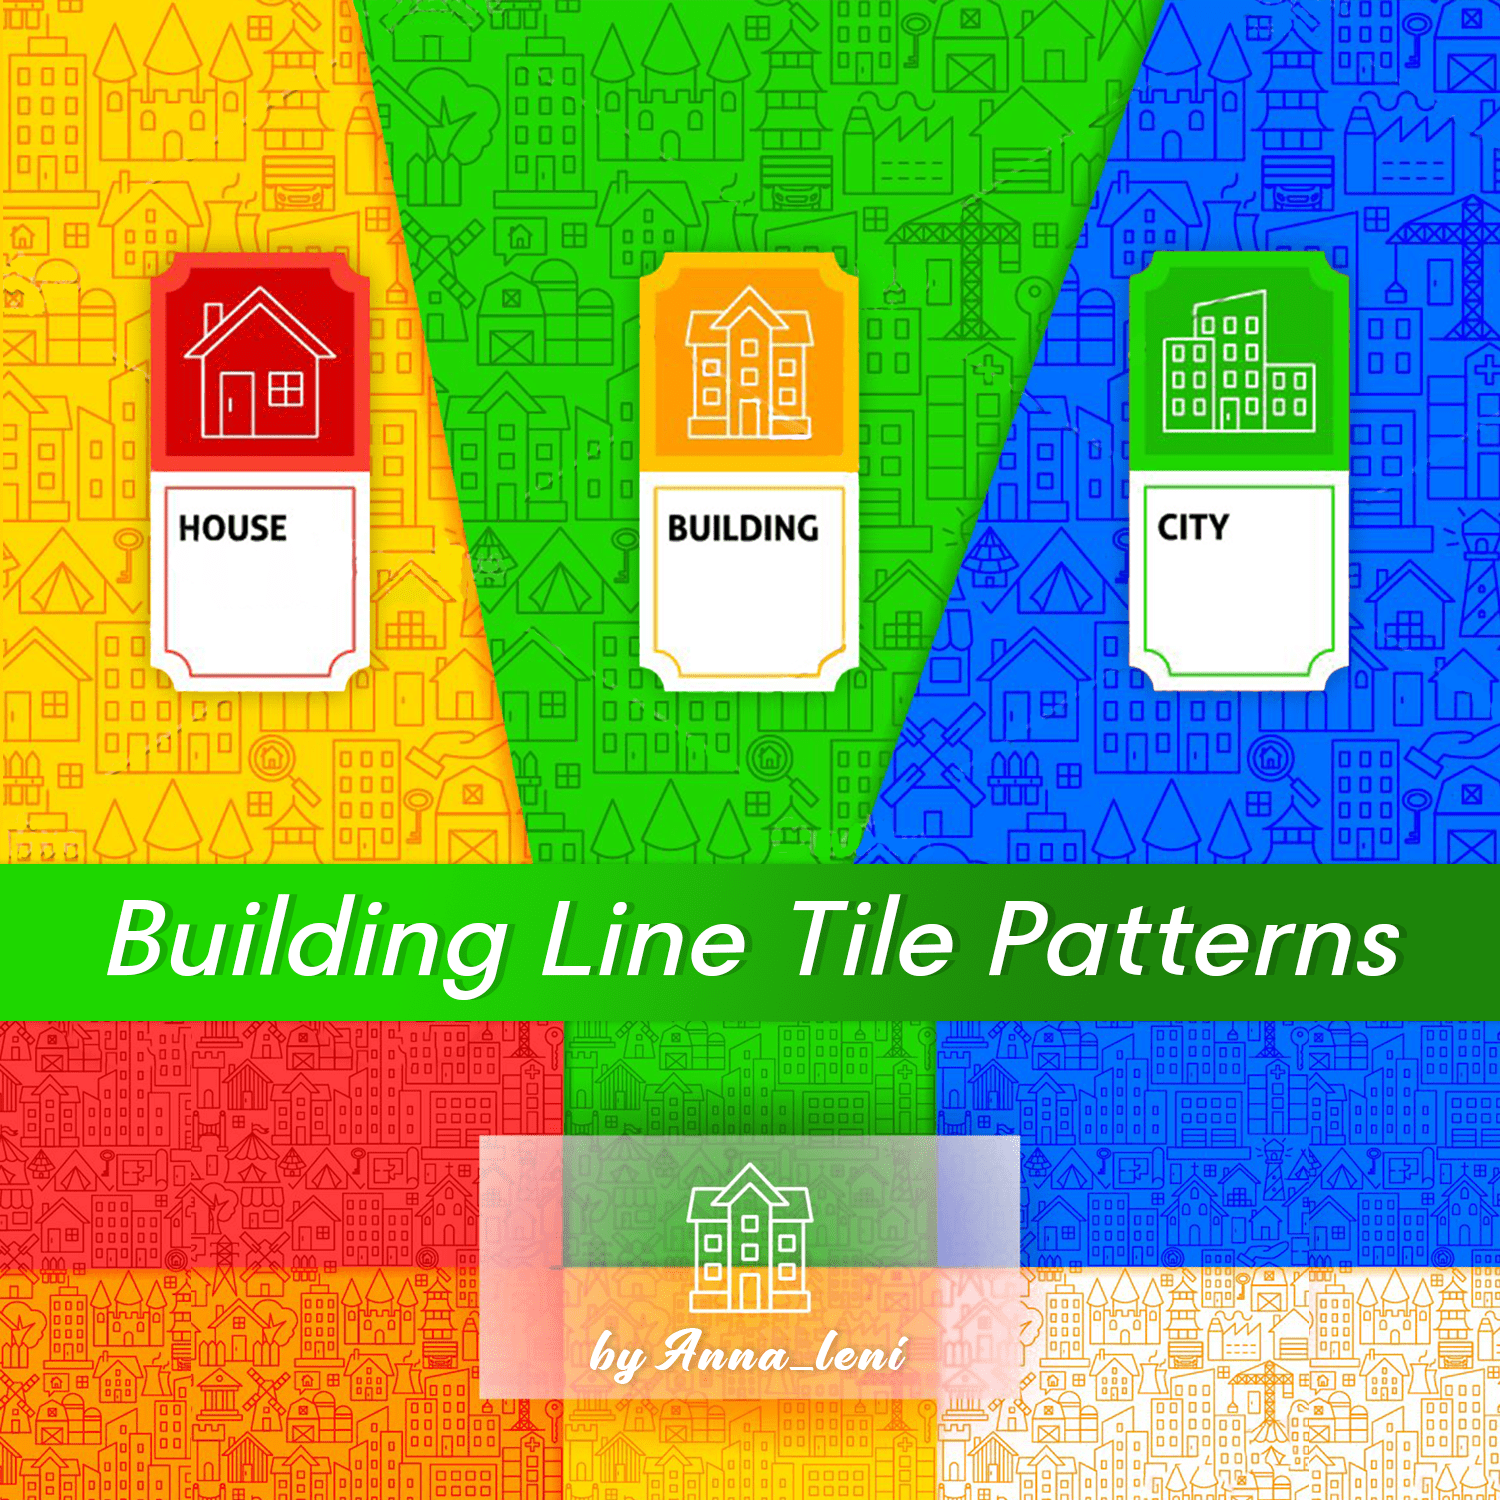 Building Line Tile Patterns cover.